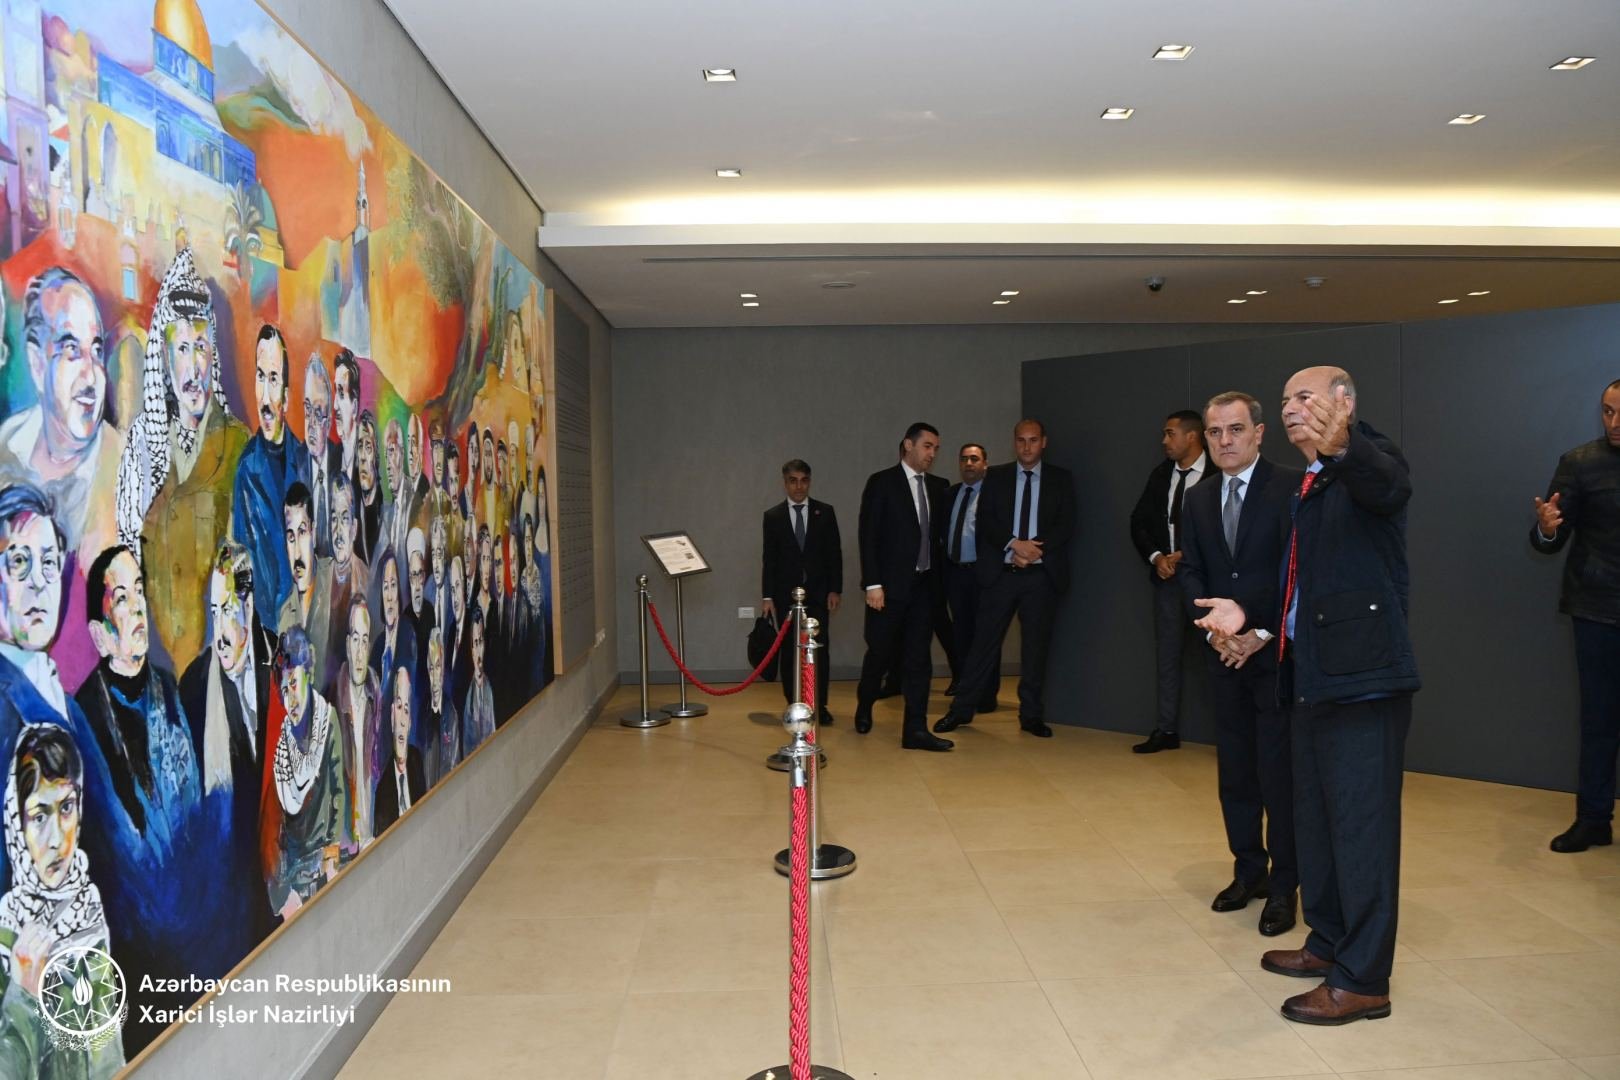 Azerbaijani FM visits Yasser Arafat's house-museum